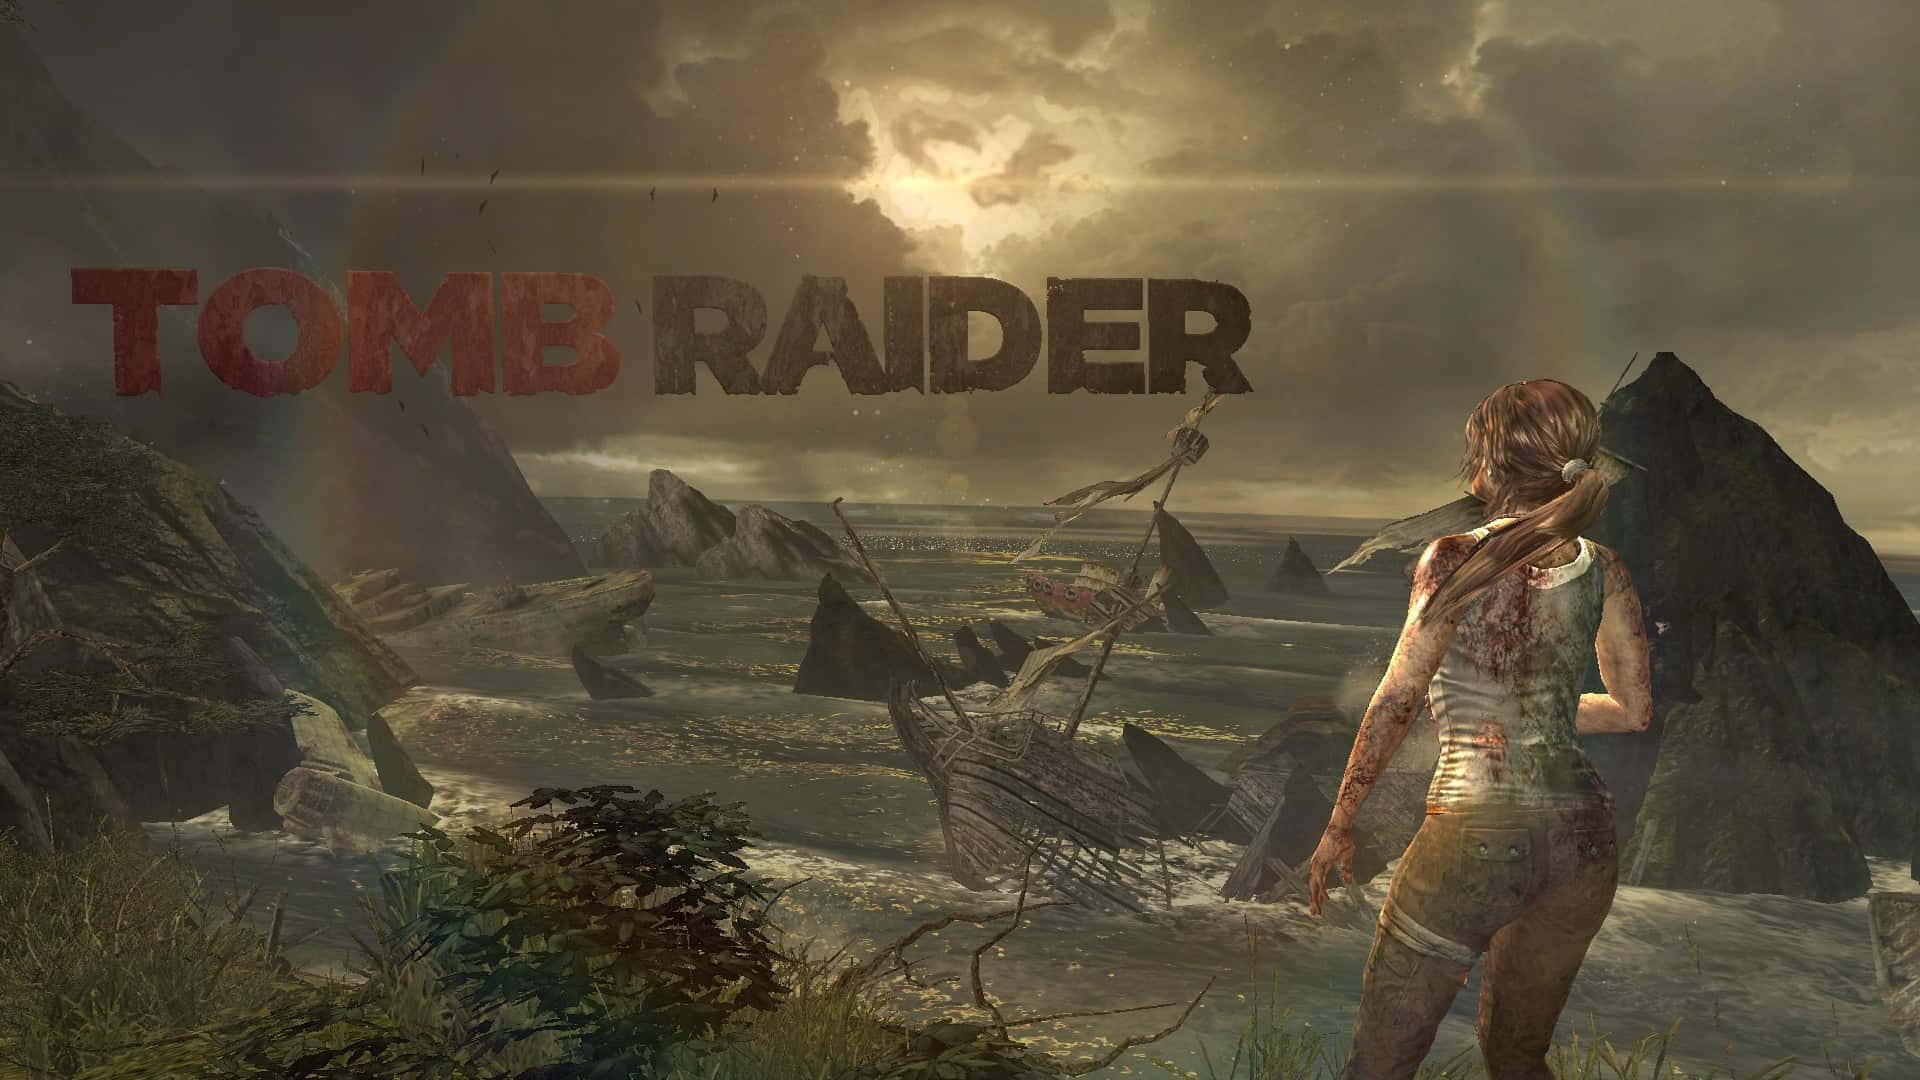 Affrontal'avventura - Shadow Of The Tomb Raider.